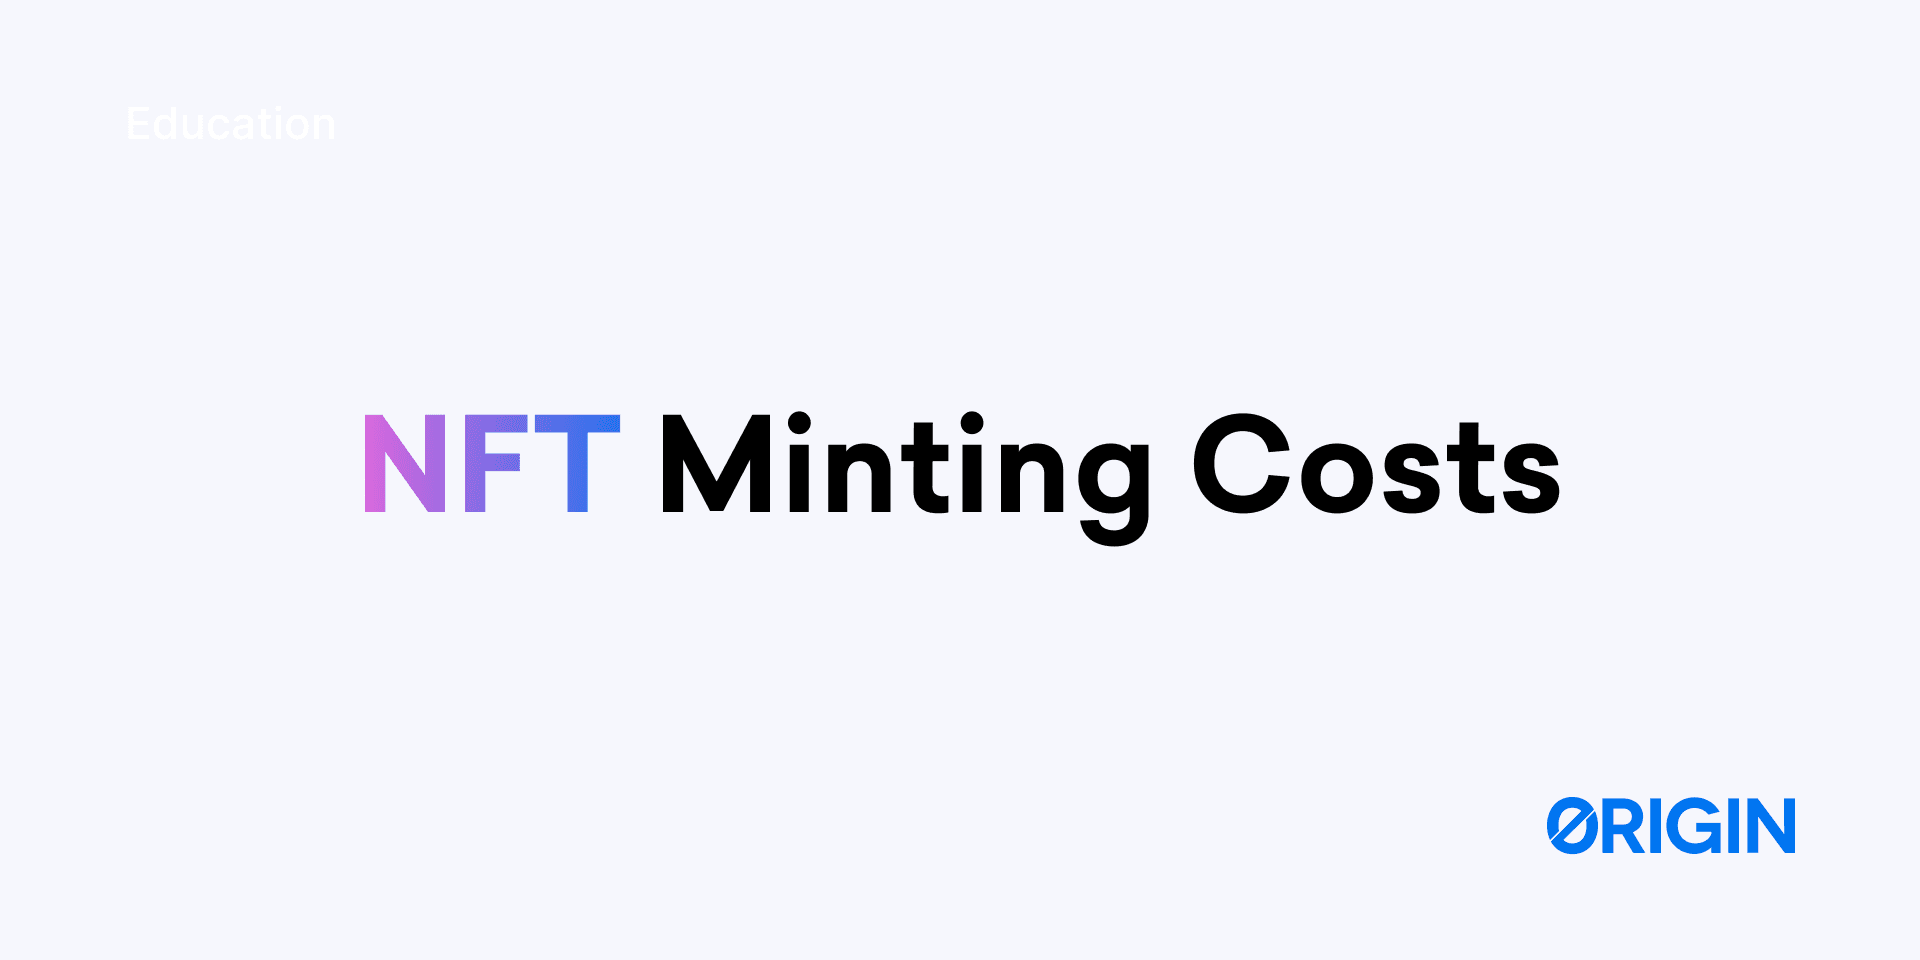 NFT minting costs